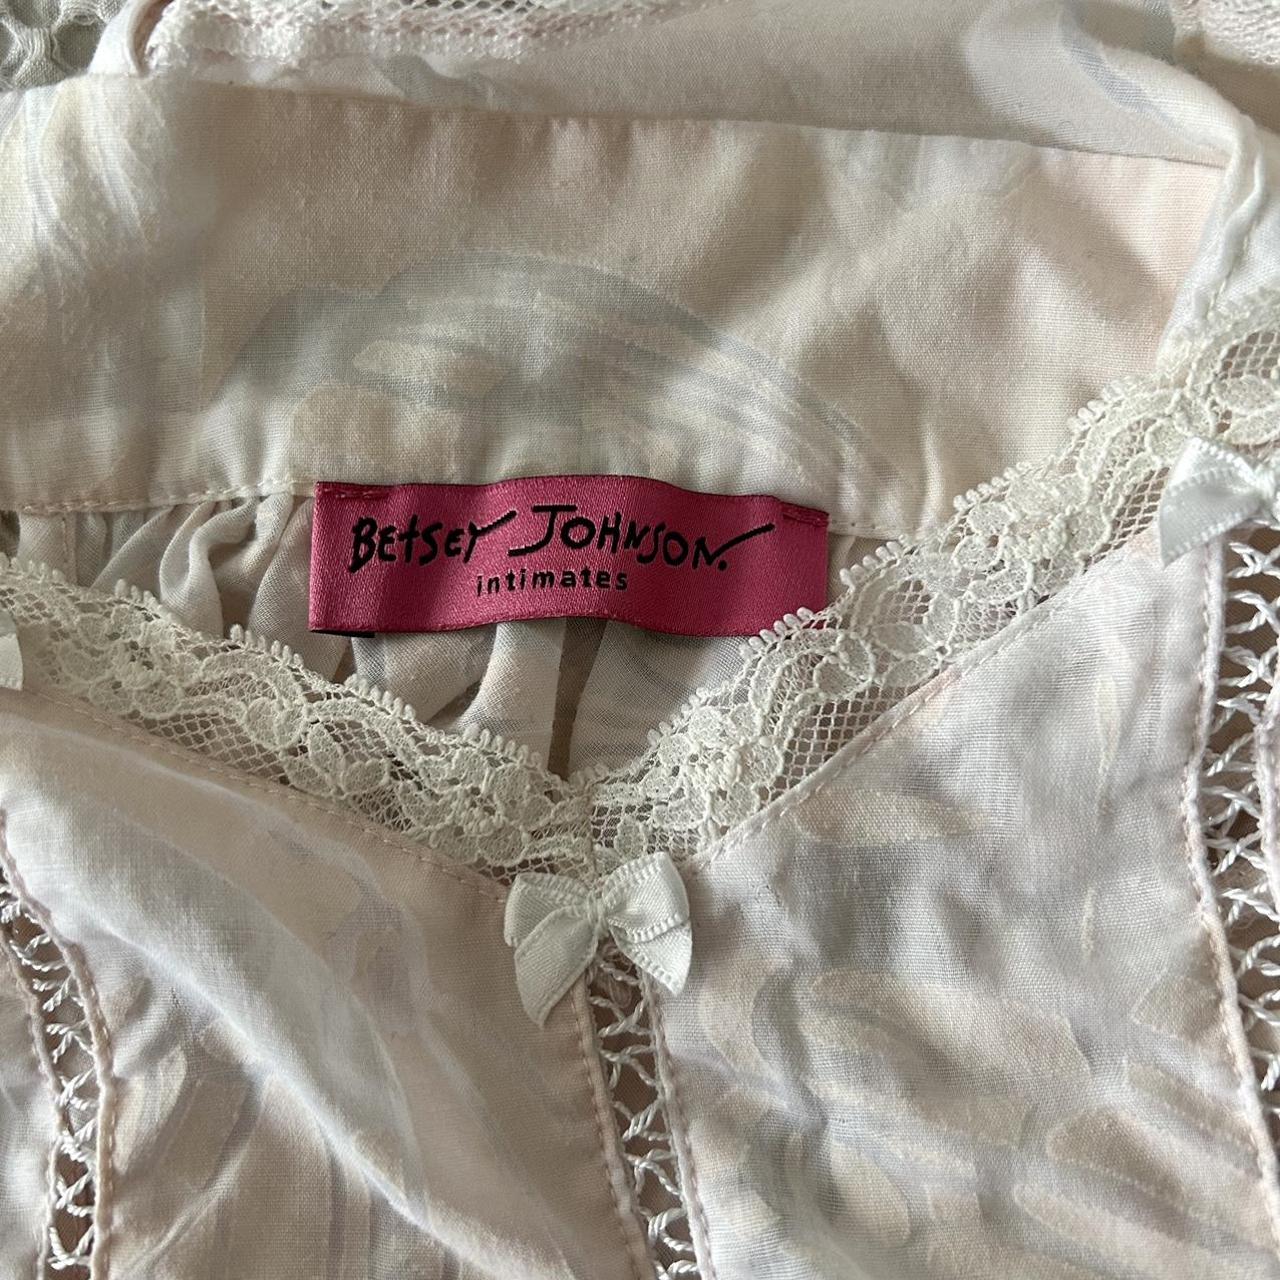 Betsey Johnson Women's White and Pink Nightwear (2)